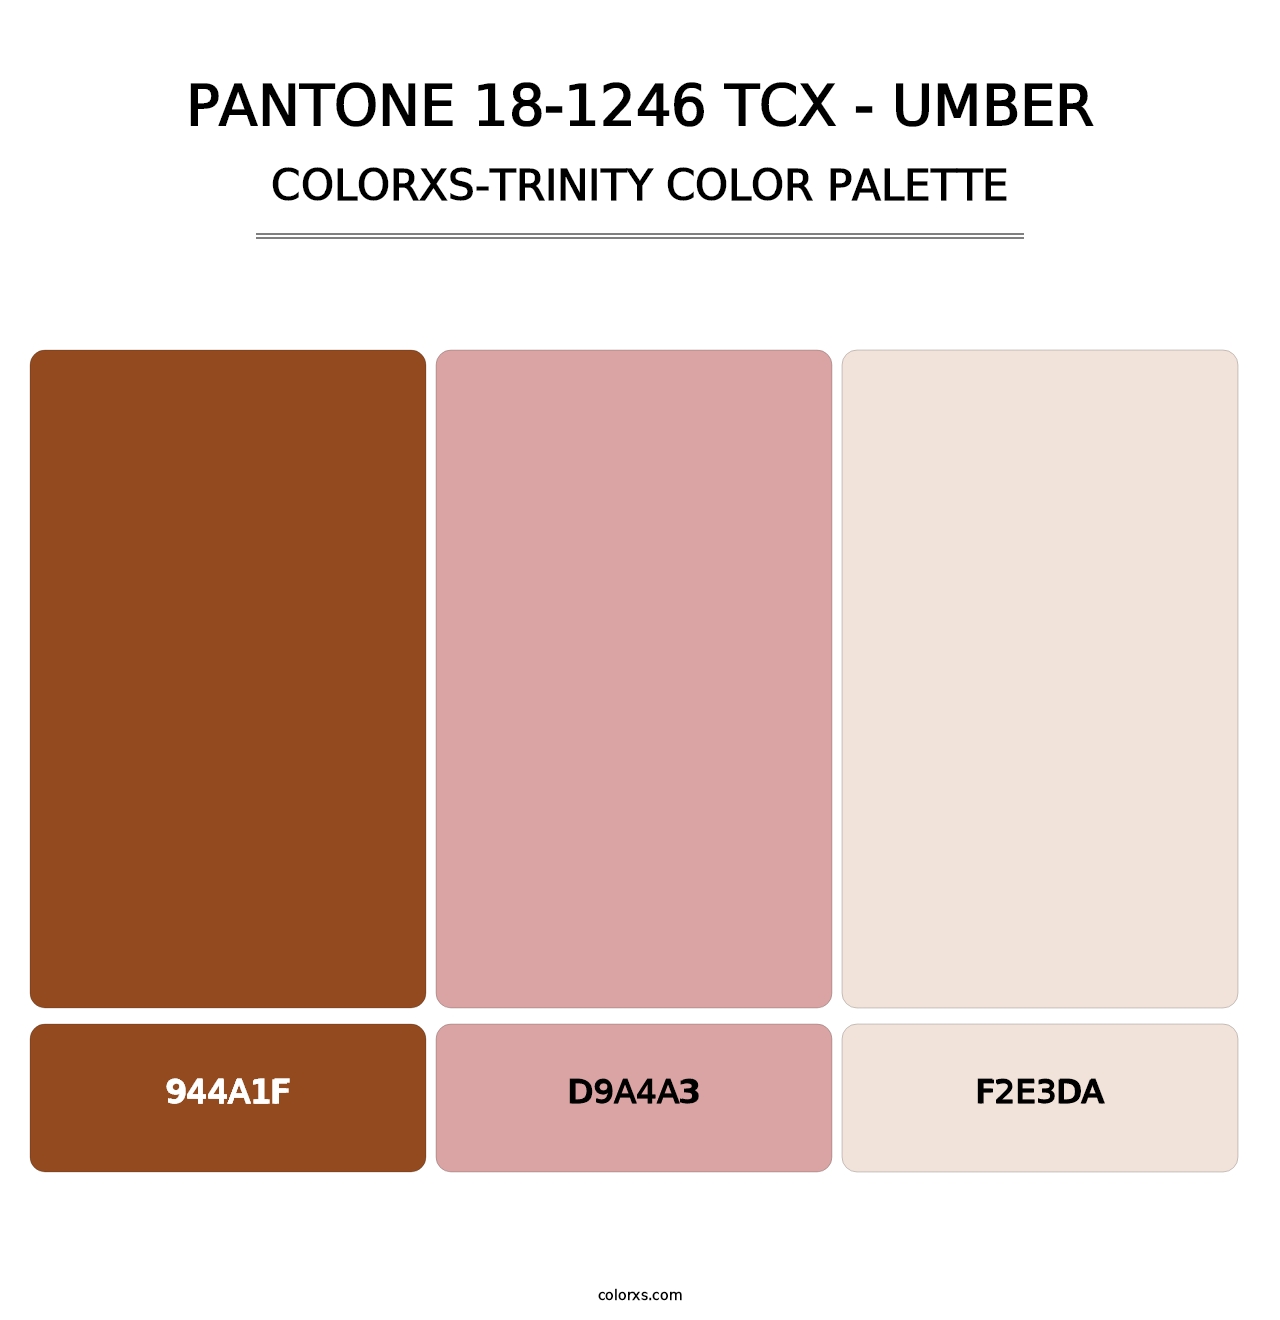 PANTONE 18-1246 TCX - Umber - Colorxs Trinity Palette